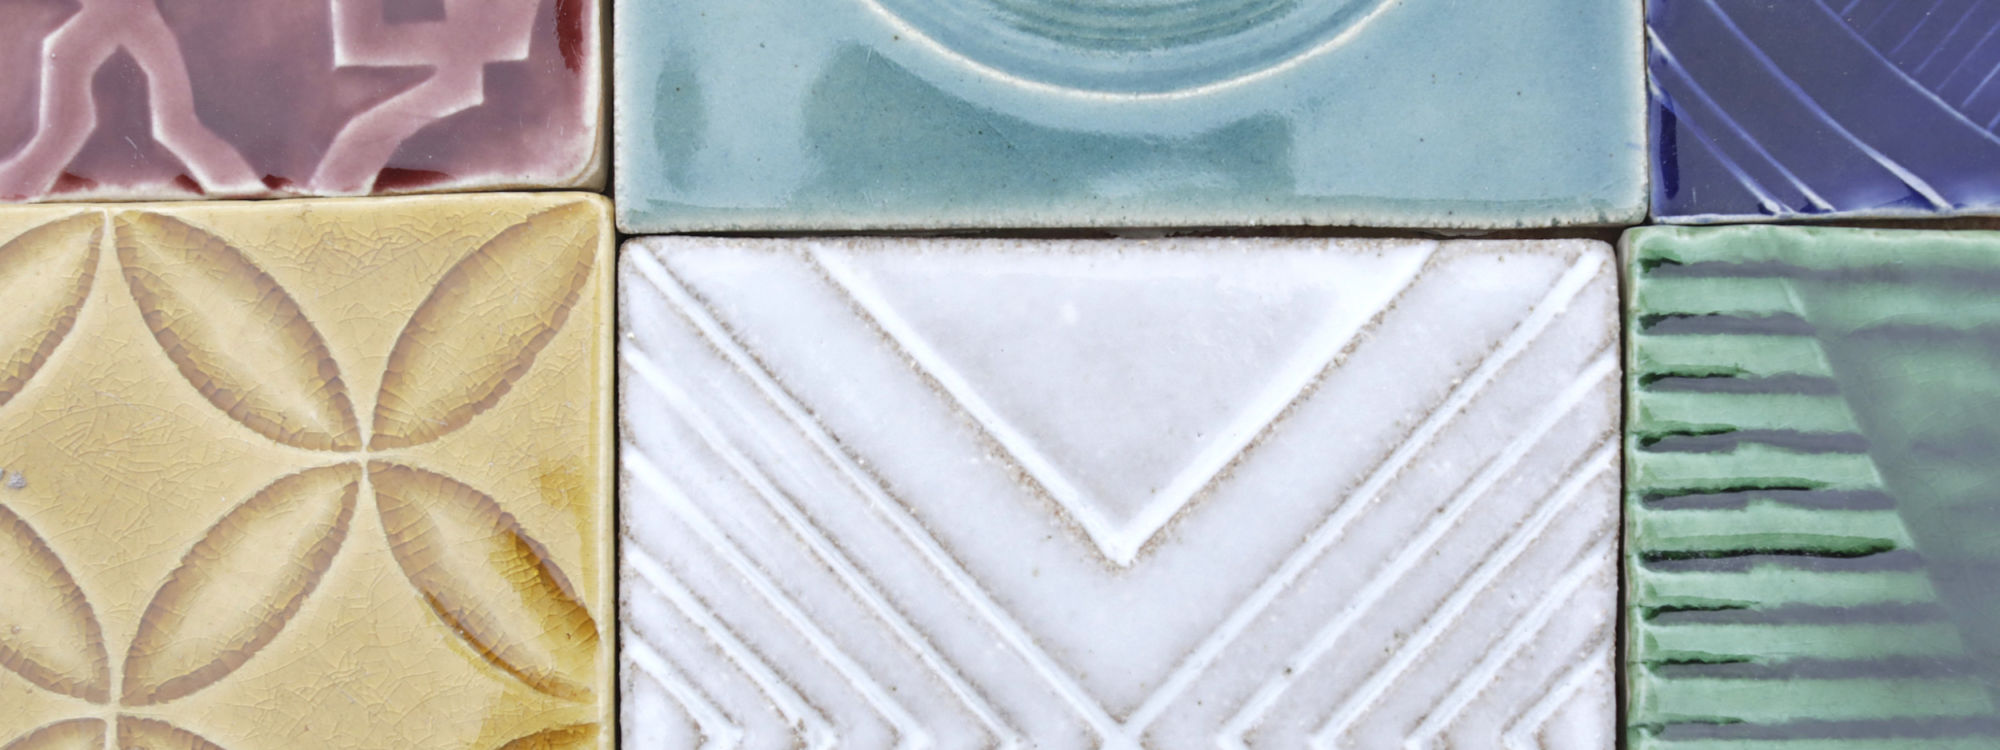 Rich Miller tiles. Photo Layton Thompson for Ceramic Review